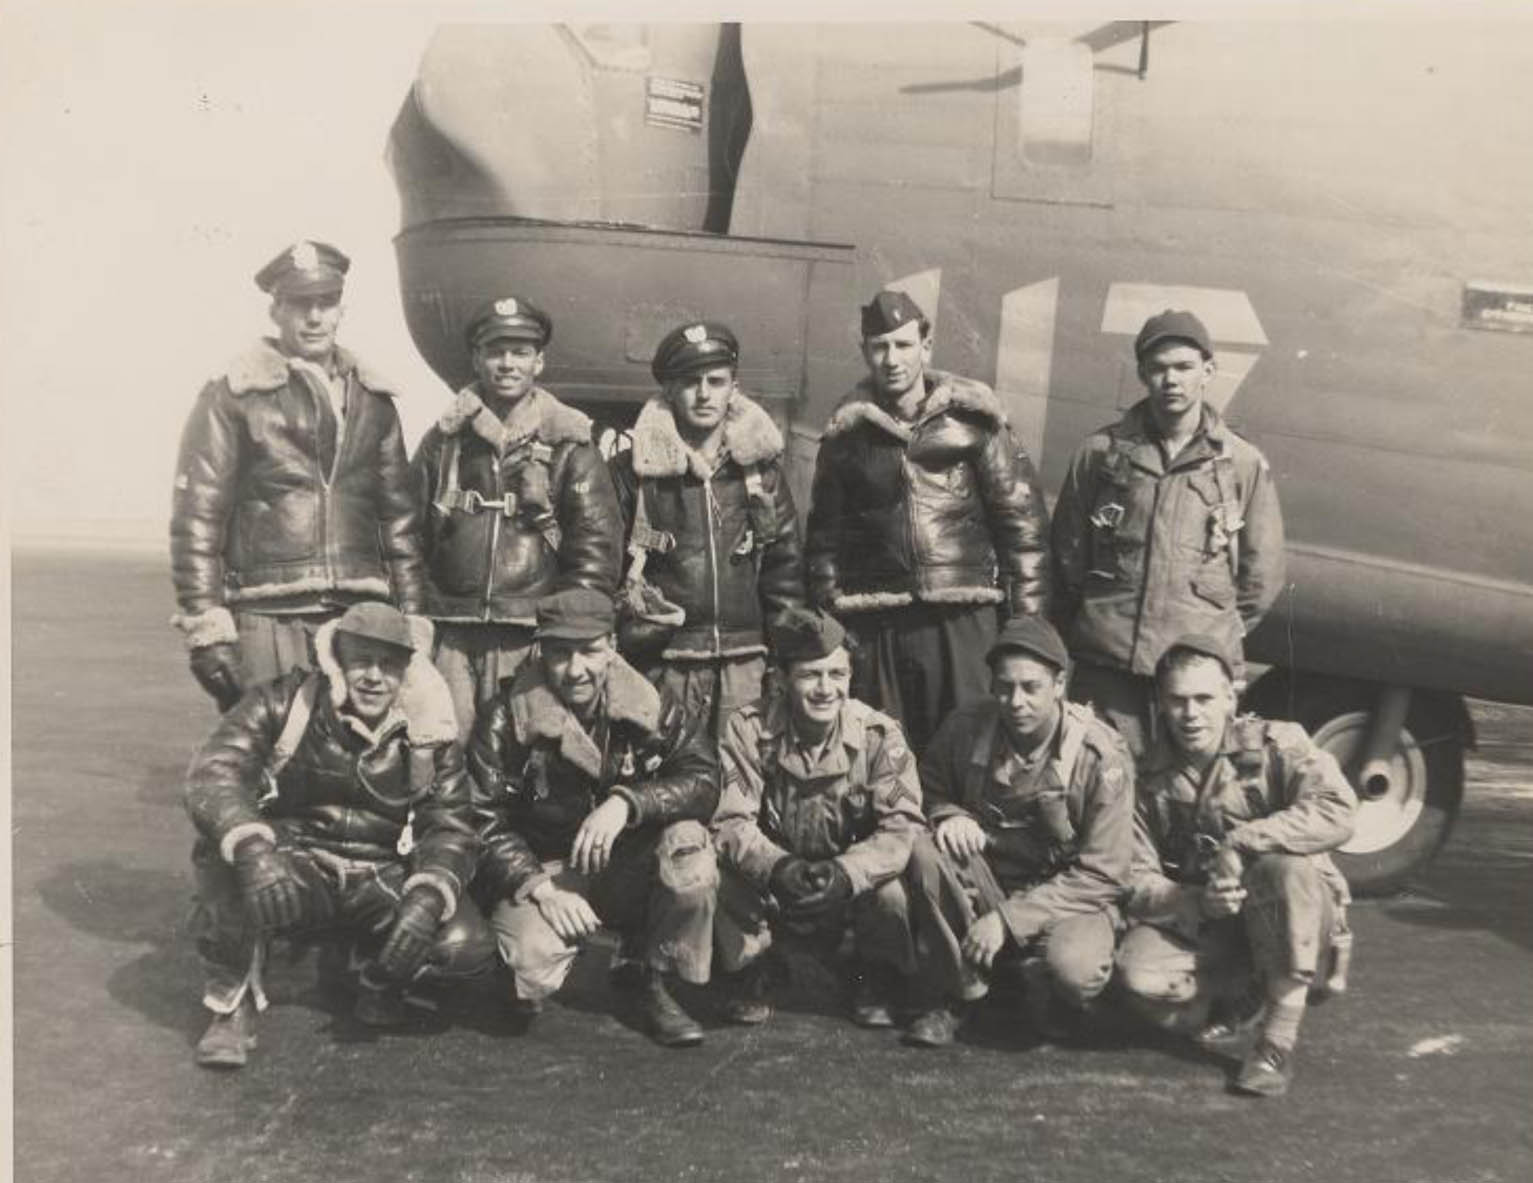 Breece Crew photo December 1944 at Tonopah Nevada